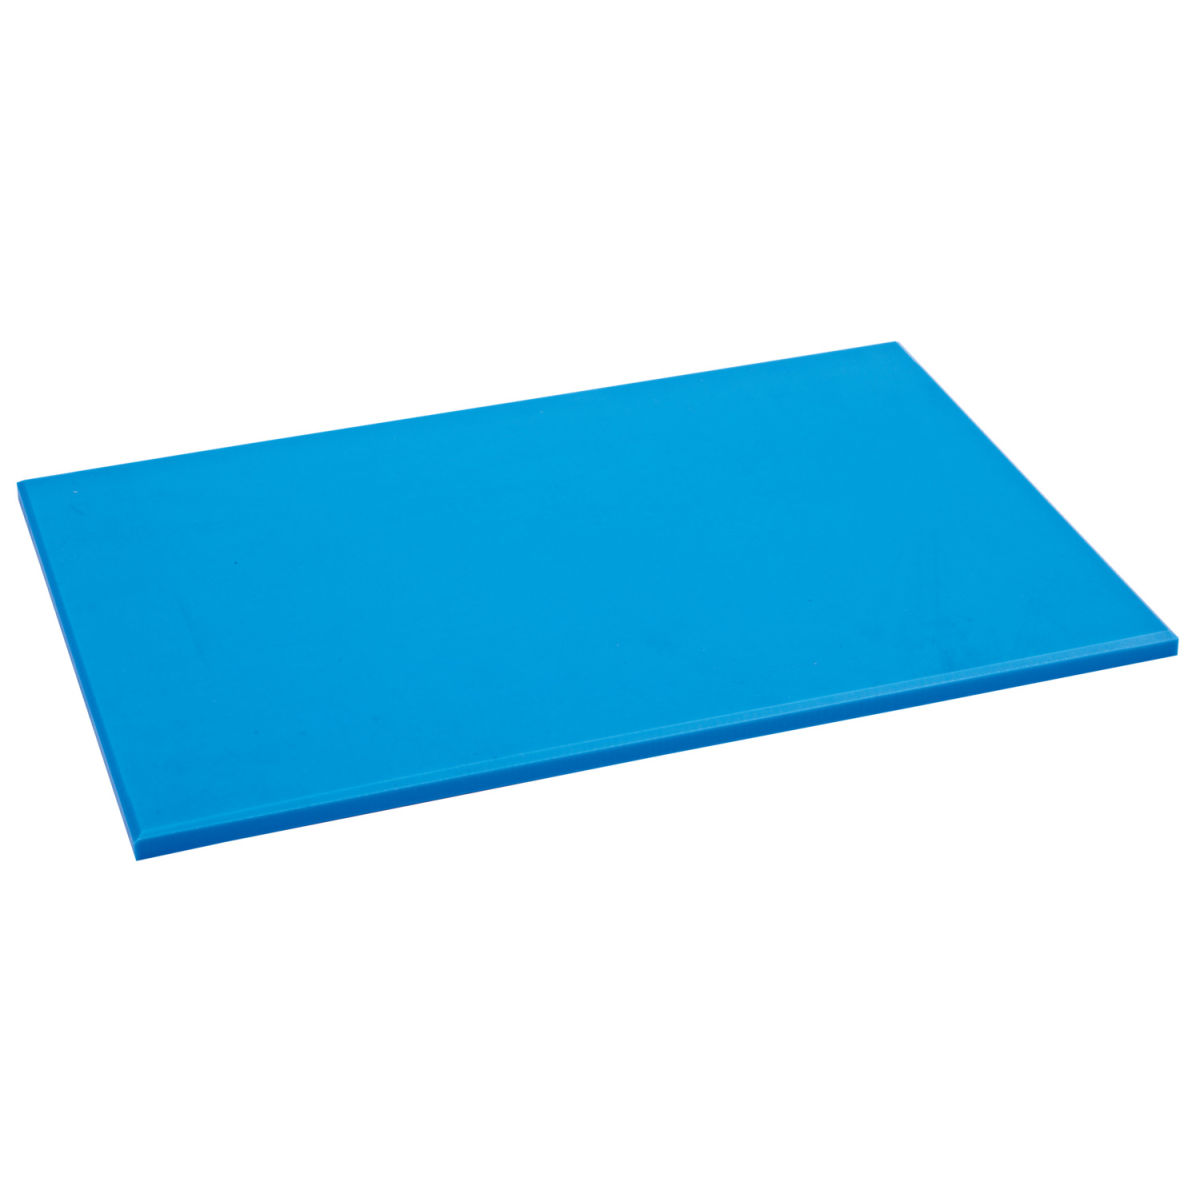 PULSIVA Snijplank Clever OSF 20x30 cm; 30x20x1.2 cm (LxBxH); blauw